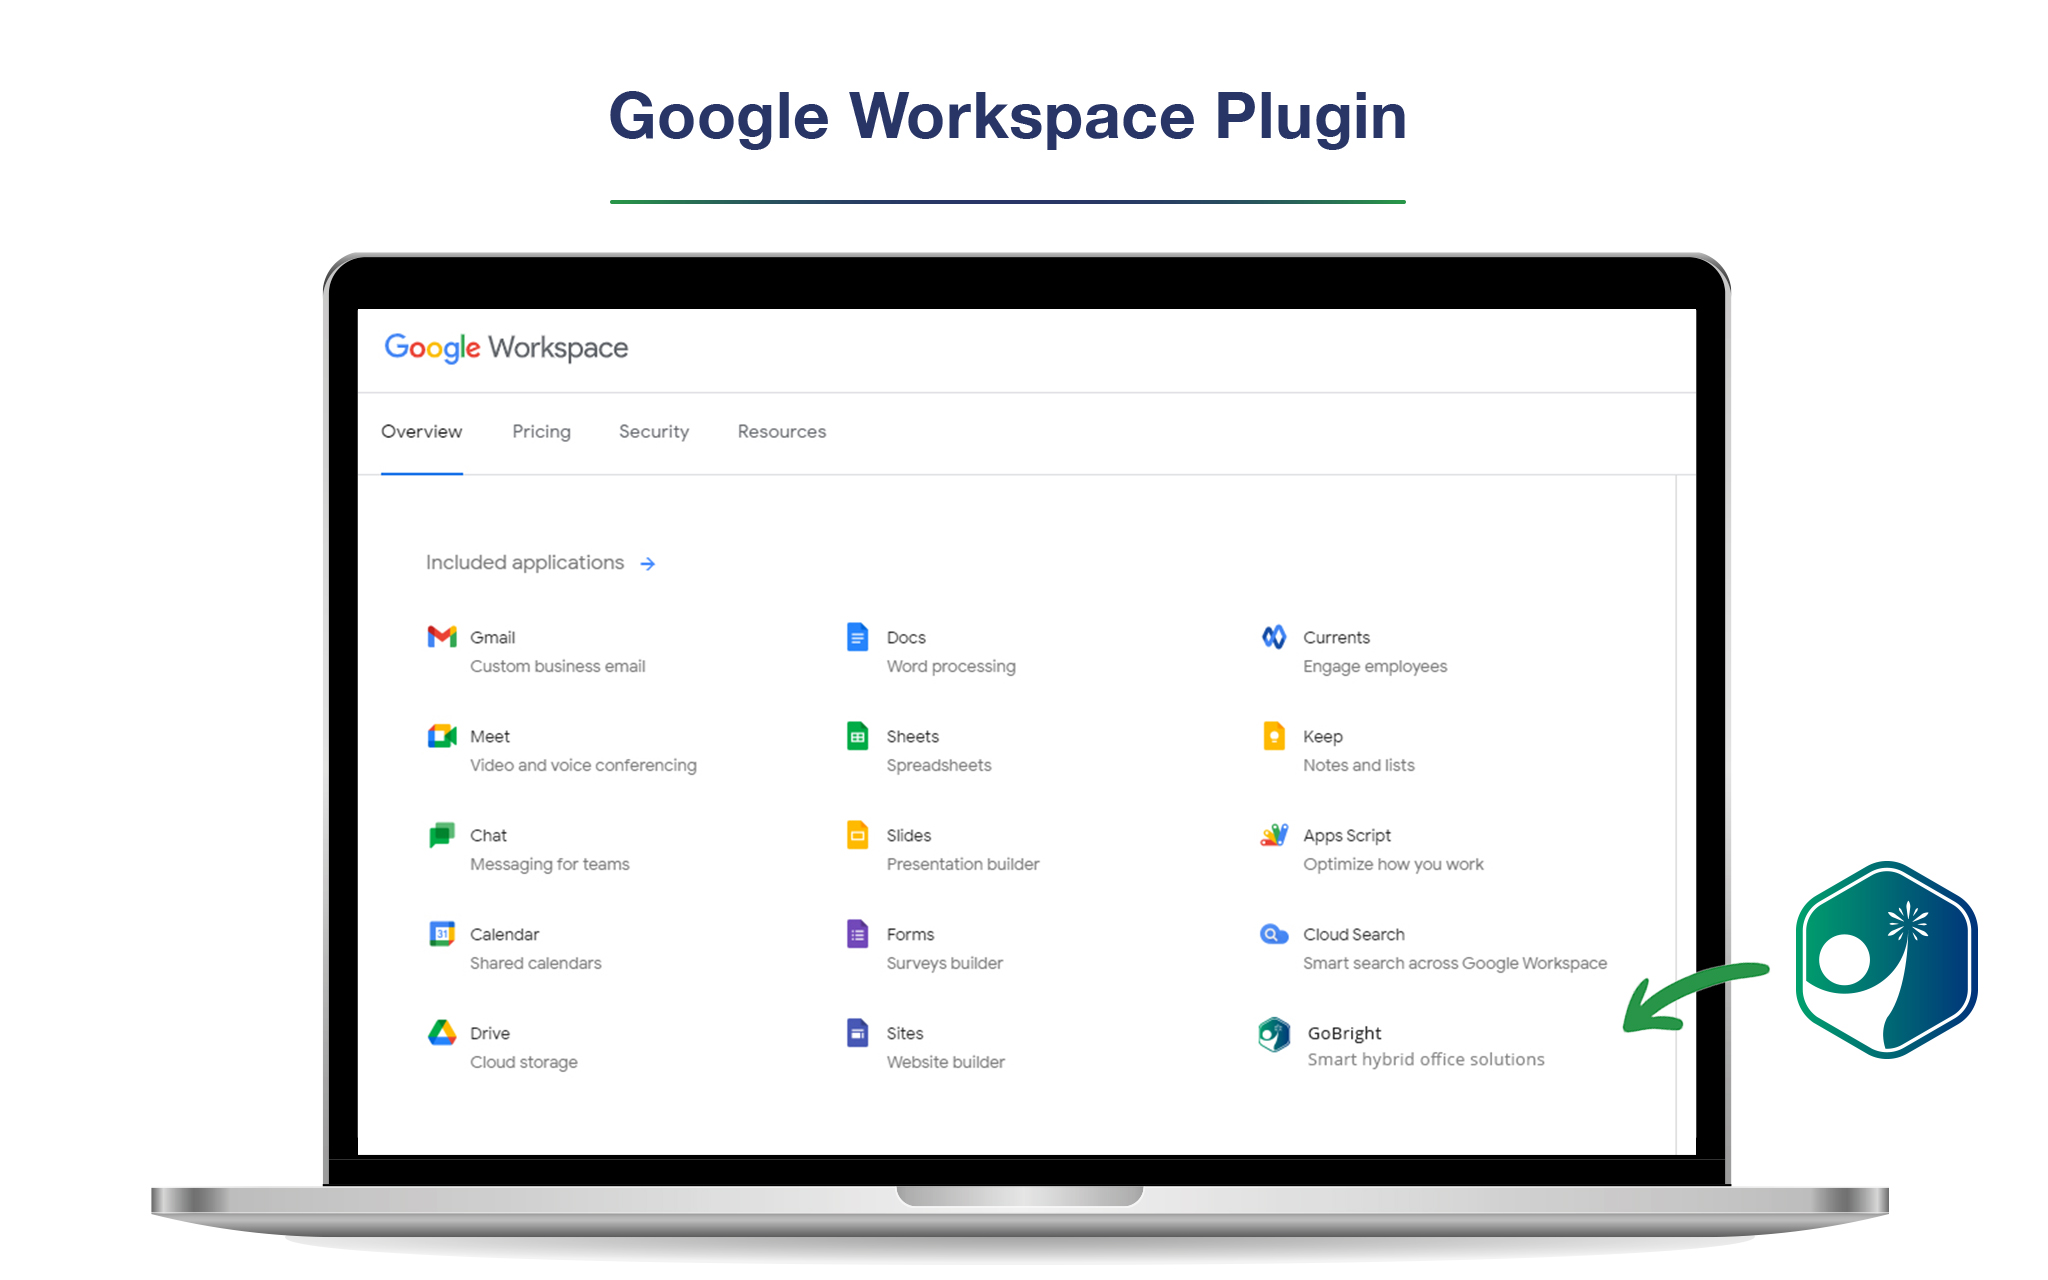 GoBright Google Workspace Plugin on laptop